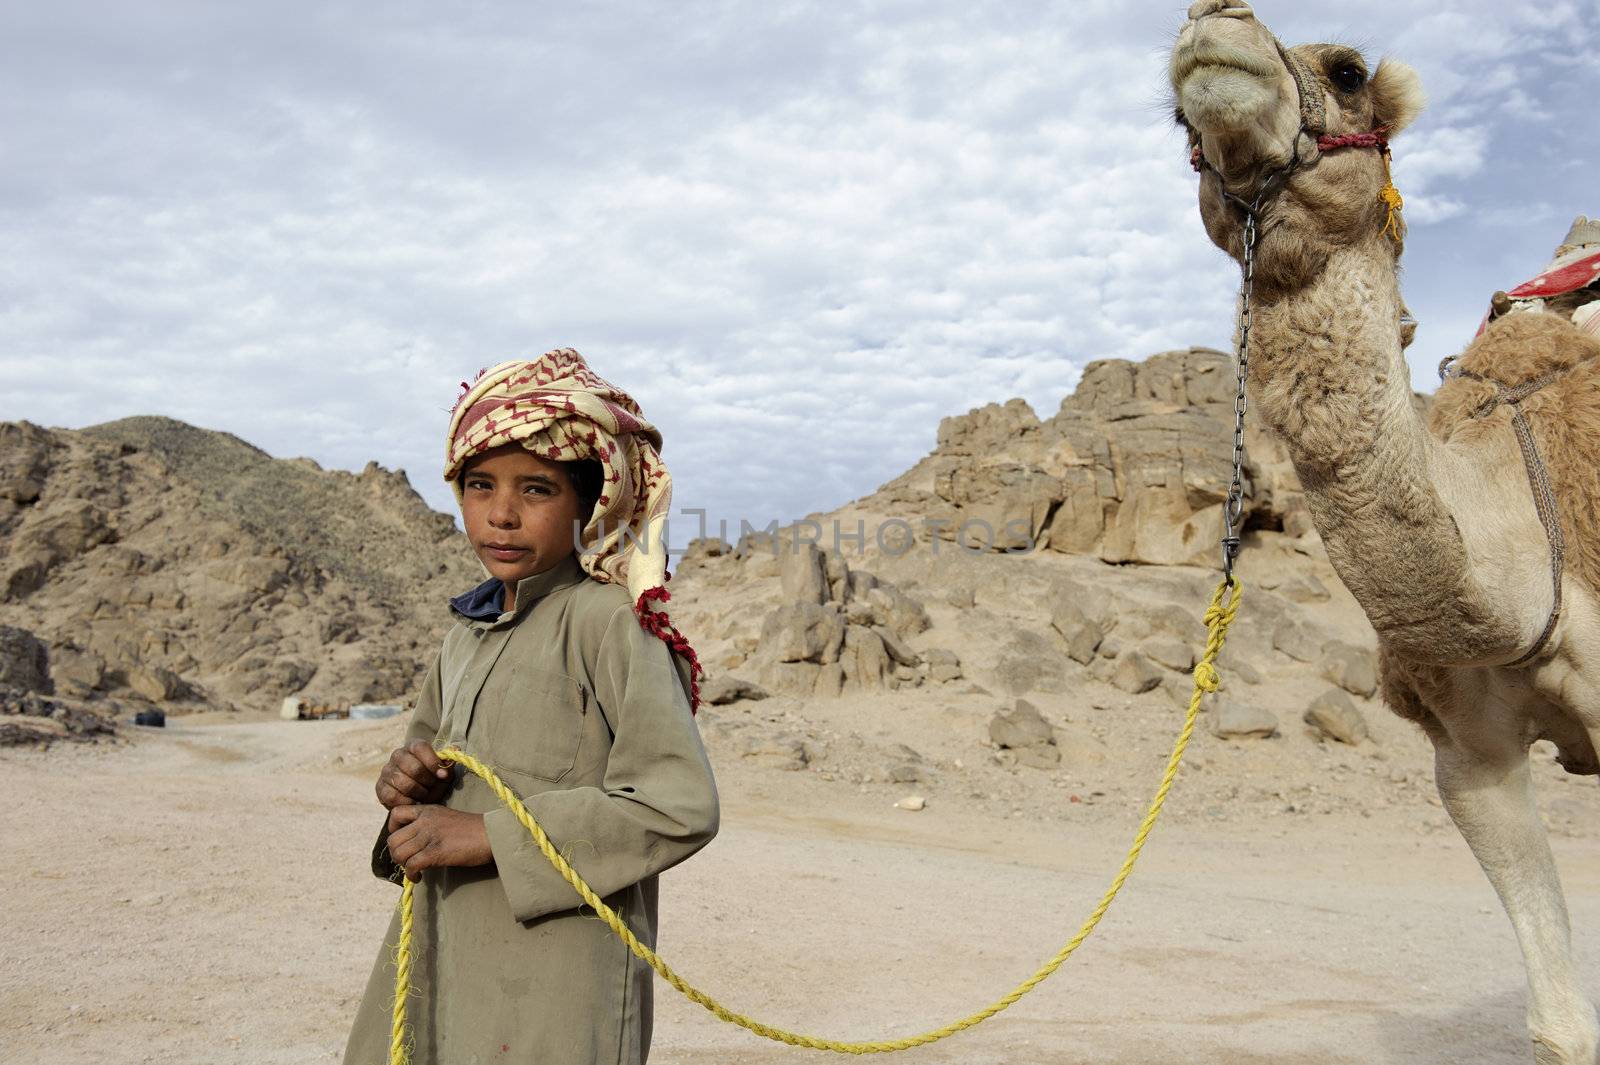 HURGHADA - JAN 30: Bedouin boy pulling a camel in Sahara desert.Jan 30,2013 in Hurghada,Egypt.